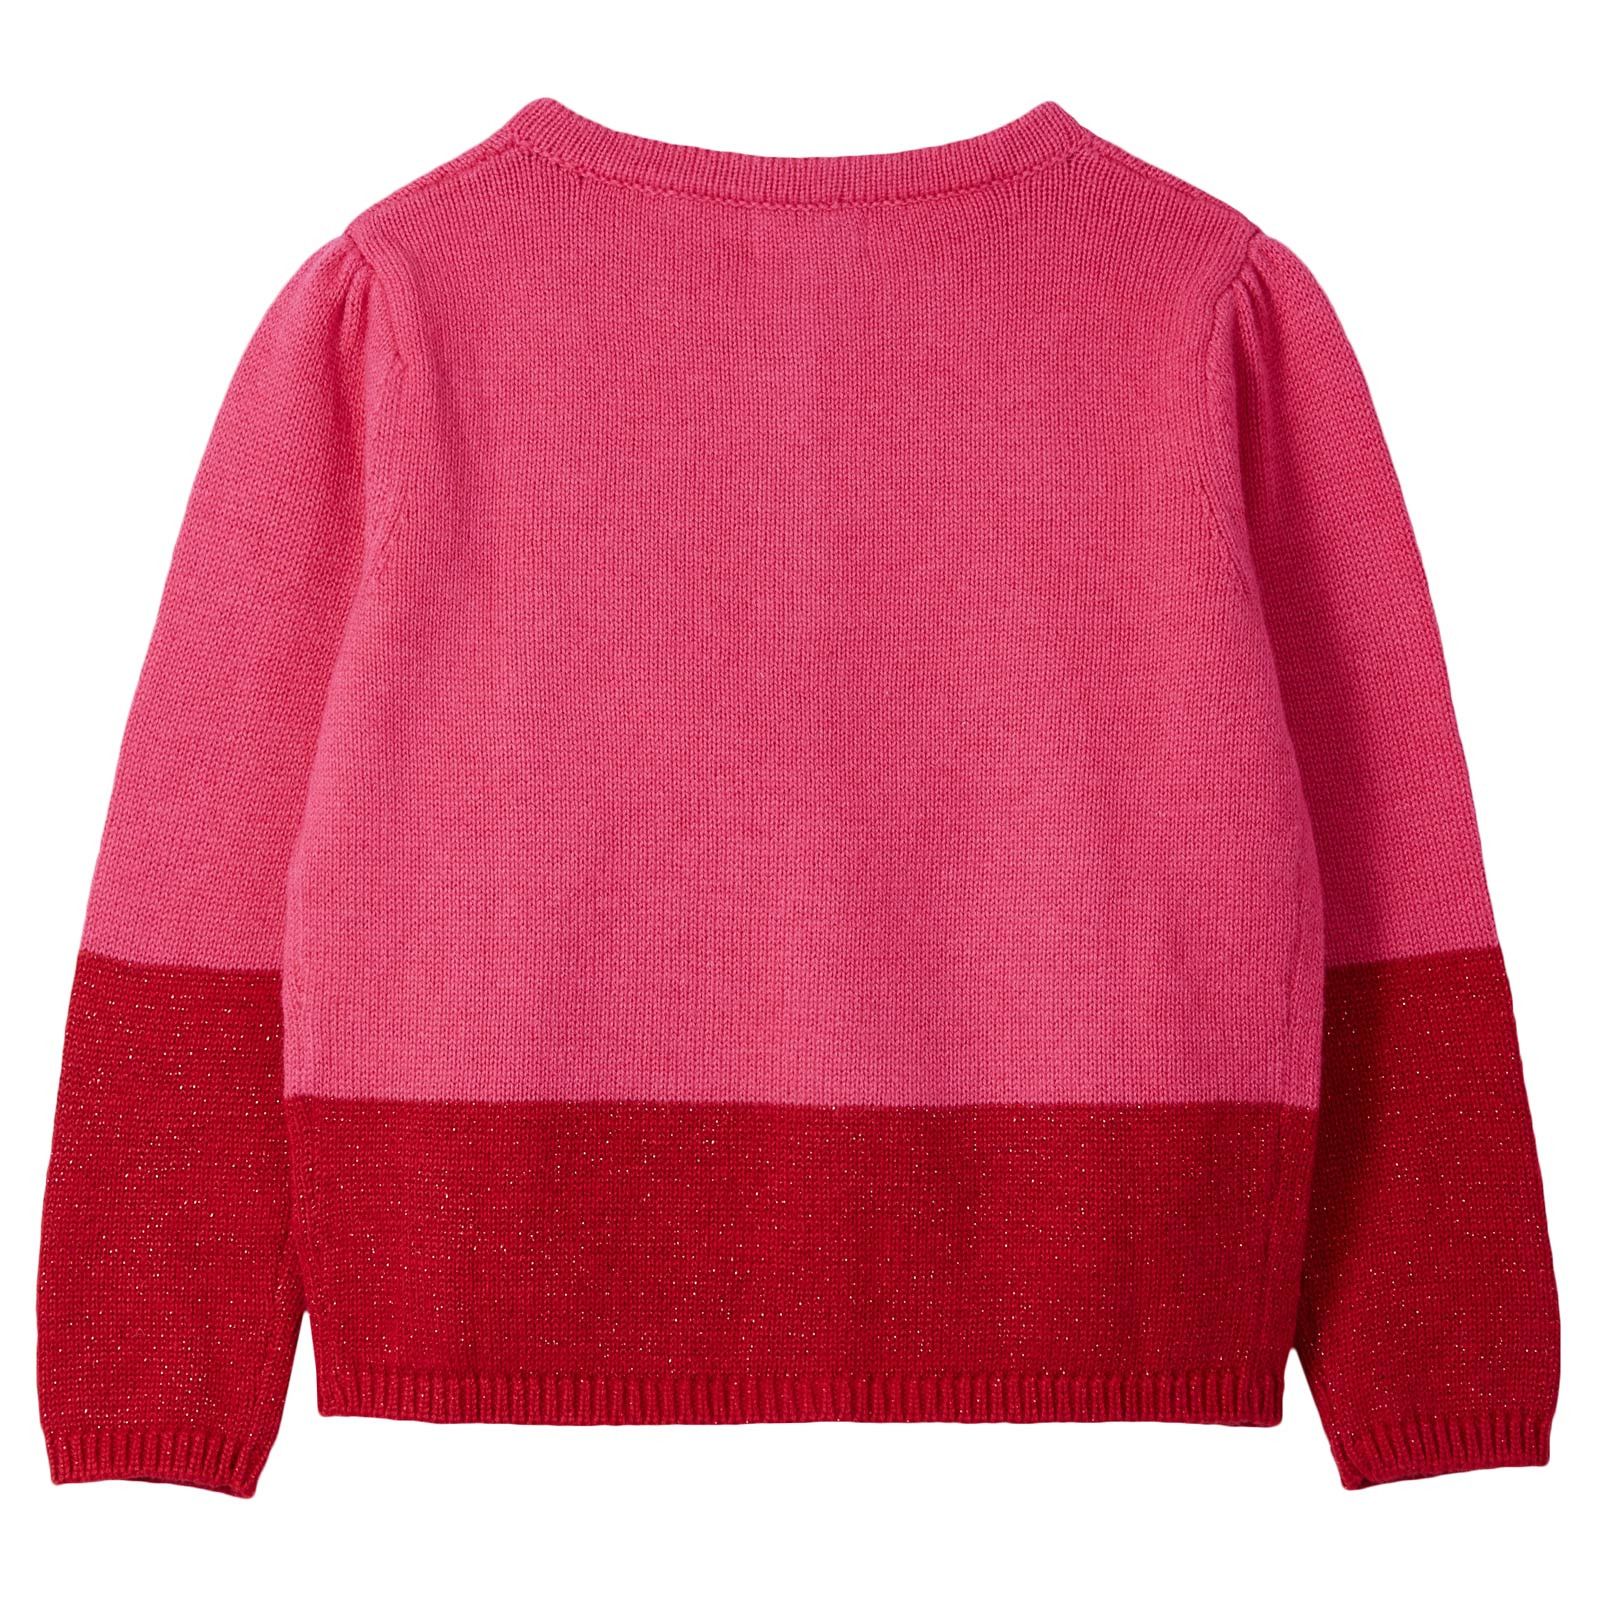 Girls Confetti Pink&Fuchsia Knitted Cardigan - CÉMAROSE | Children's Fashion Store - 2